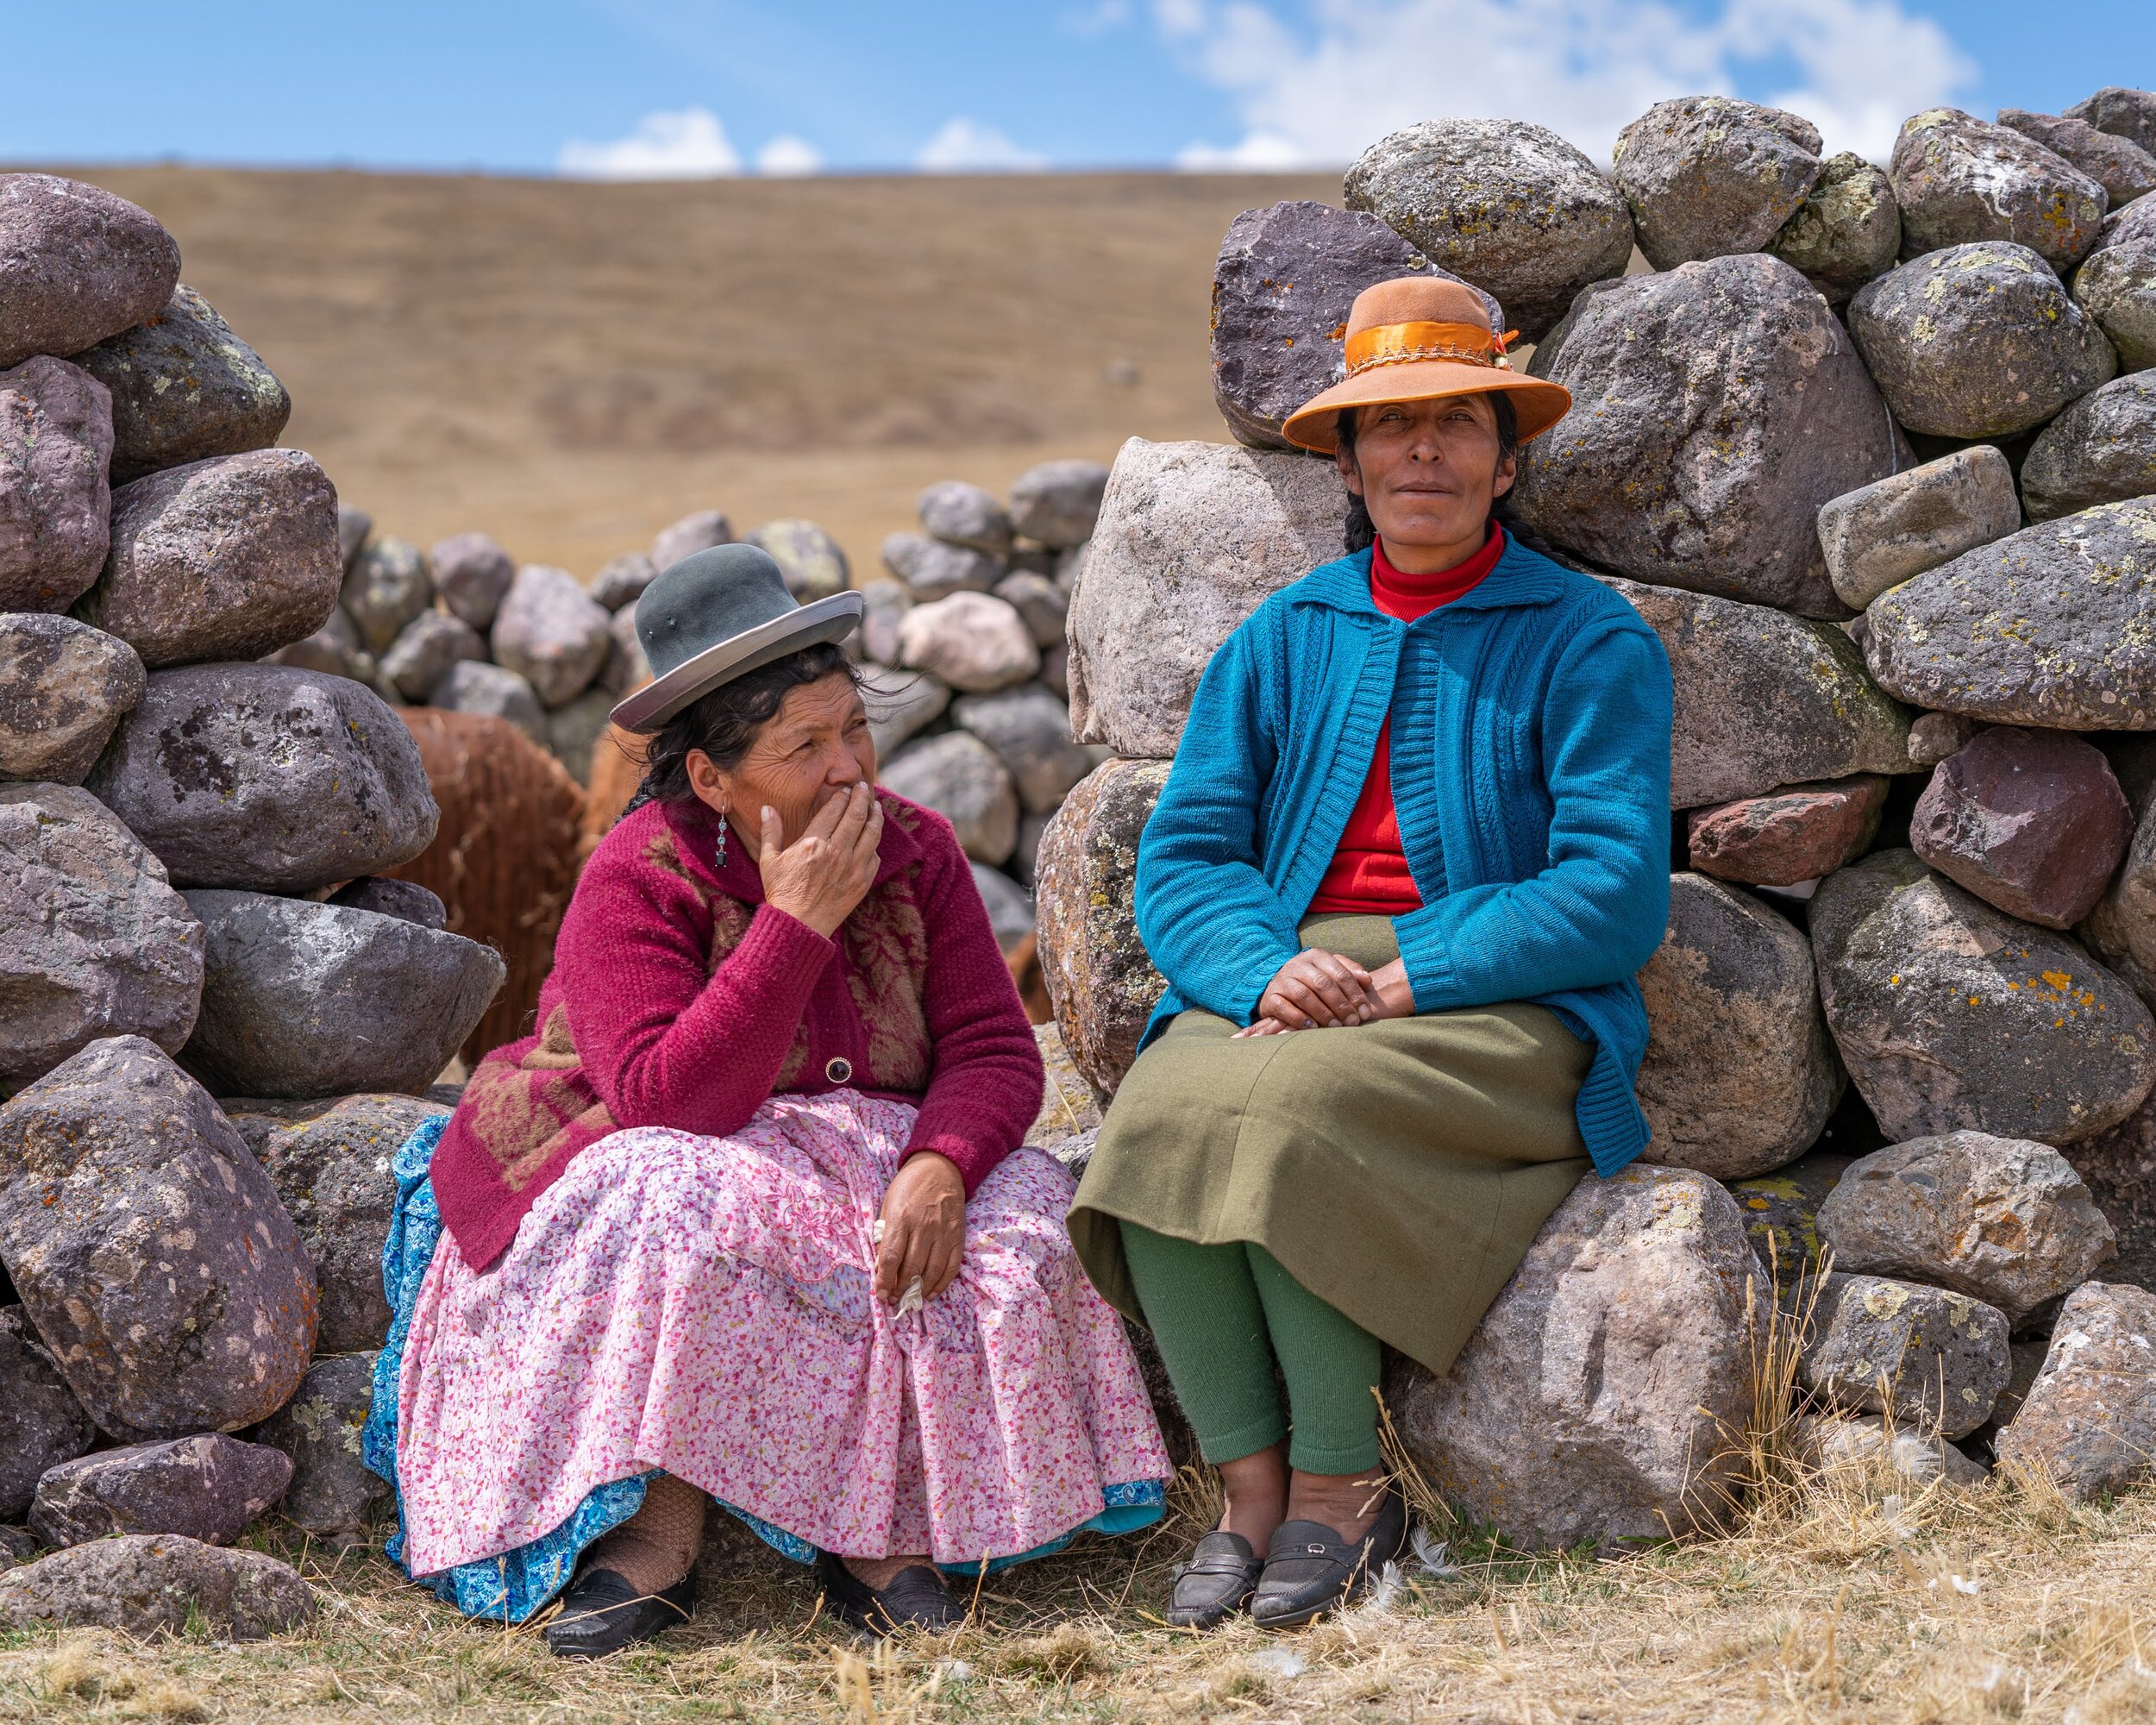 354_Wasim Muklashy Photography_Andes Mountains_Peru_Quechua Benefit_Picotani_Macusani_Alpaca.jpg